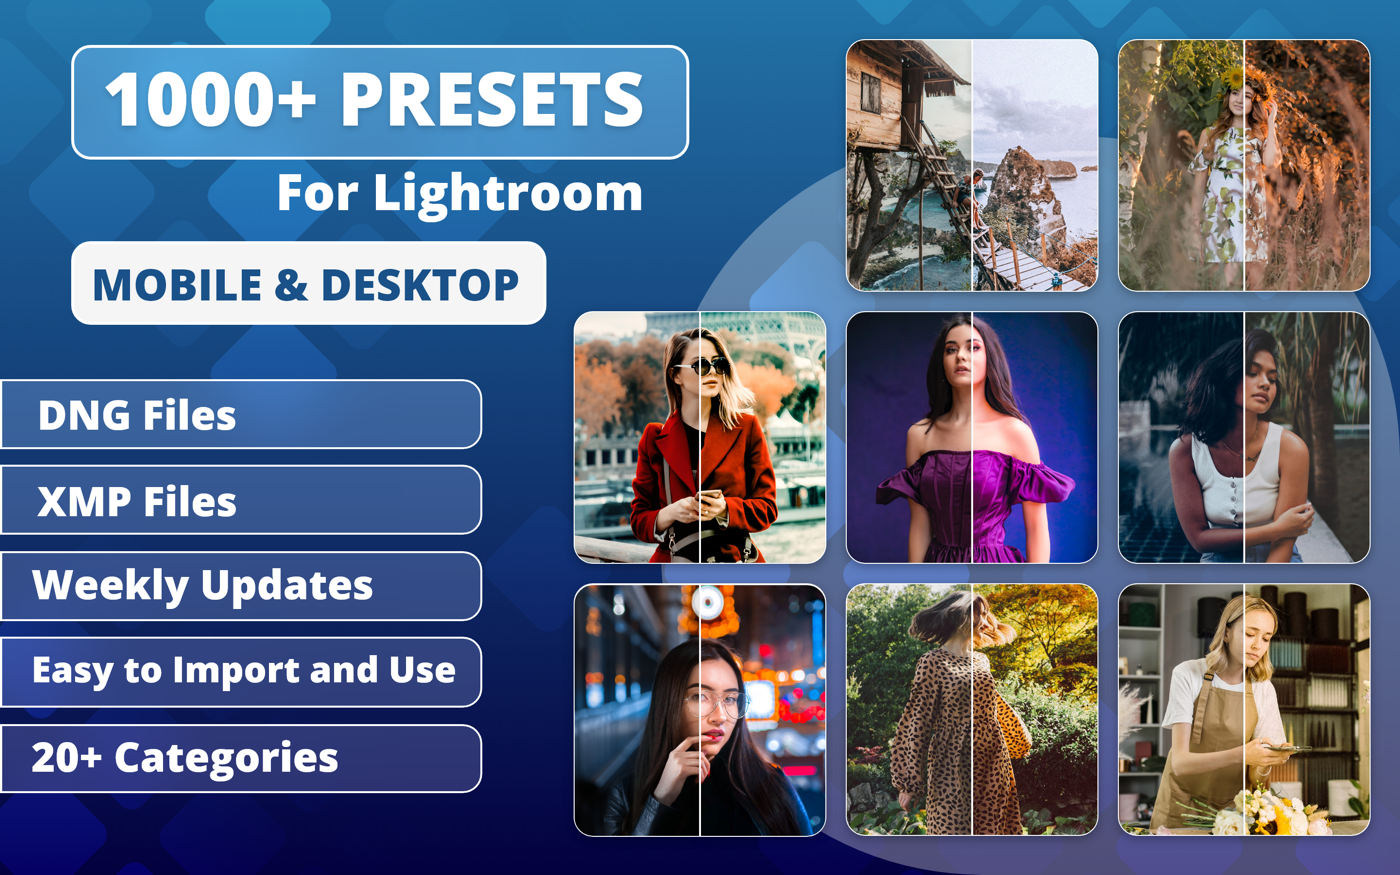 Presets for Lightroom 1.0 : Main Window